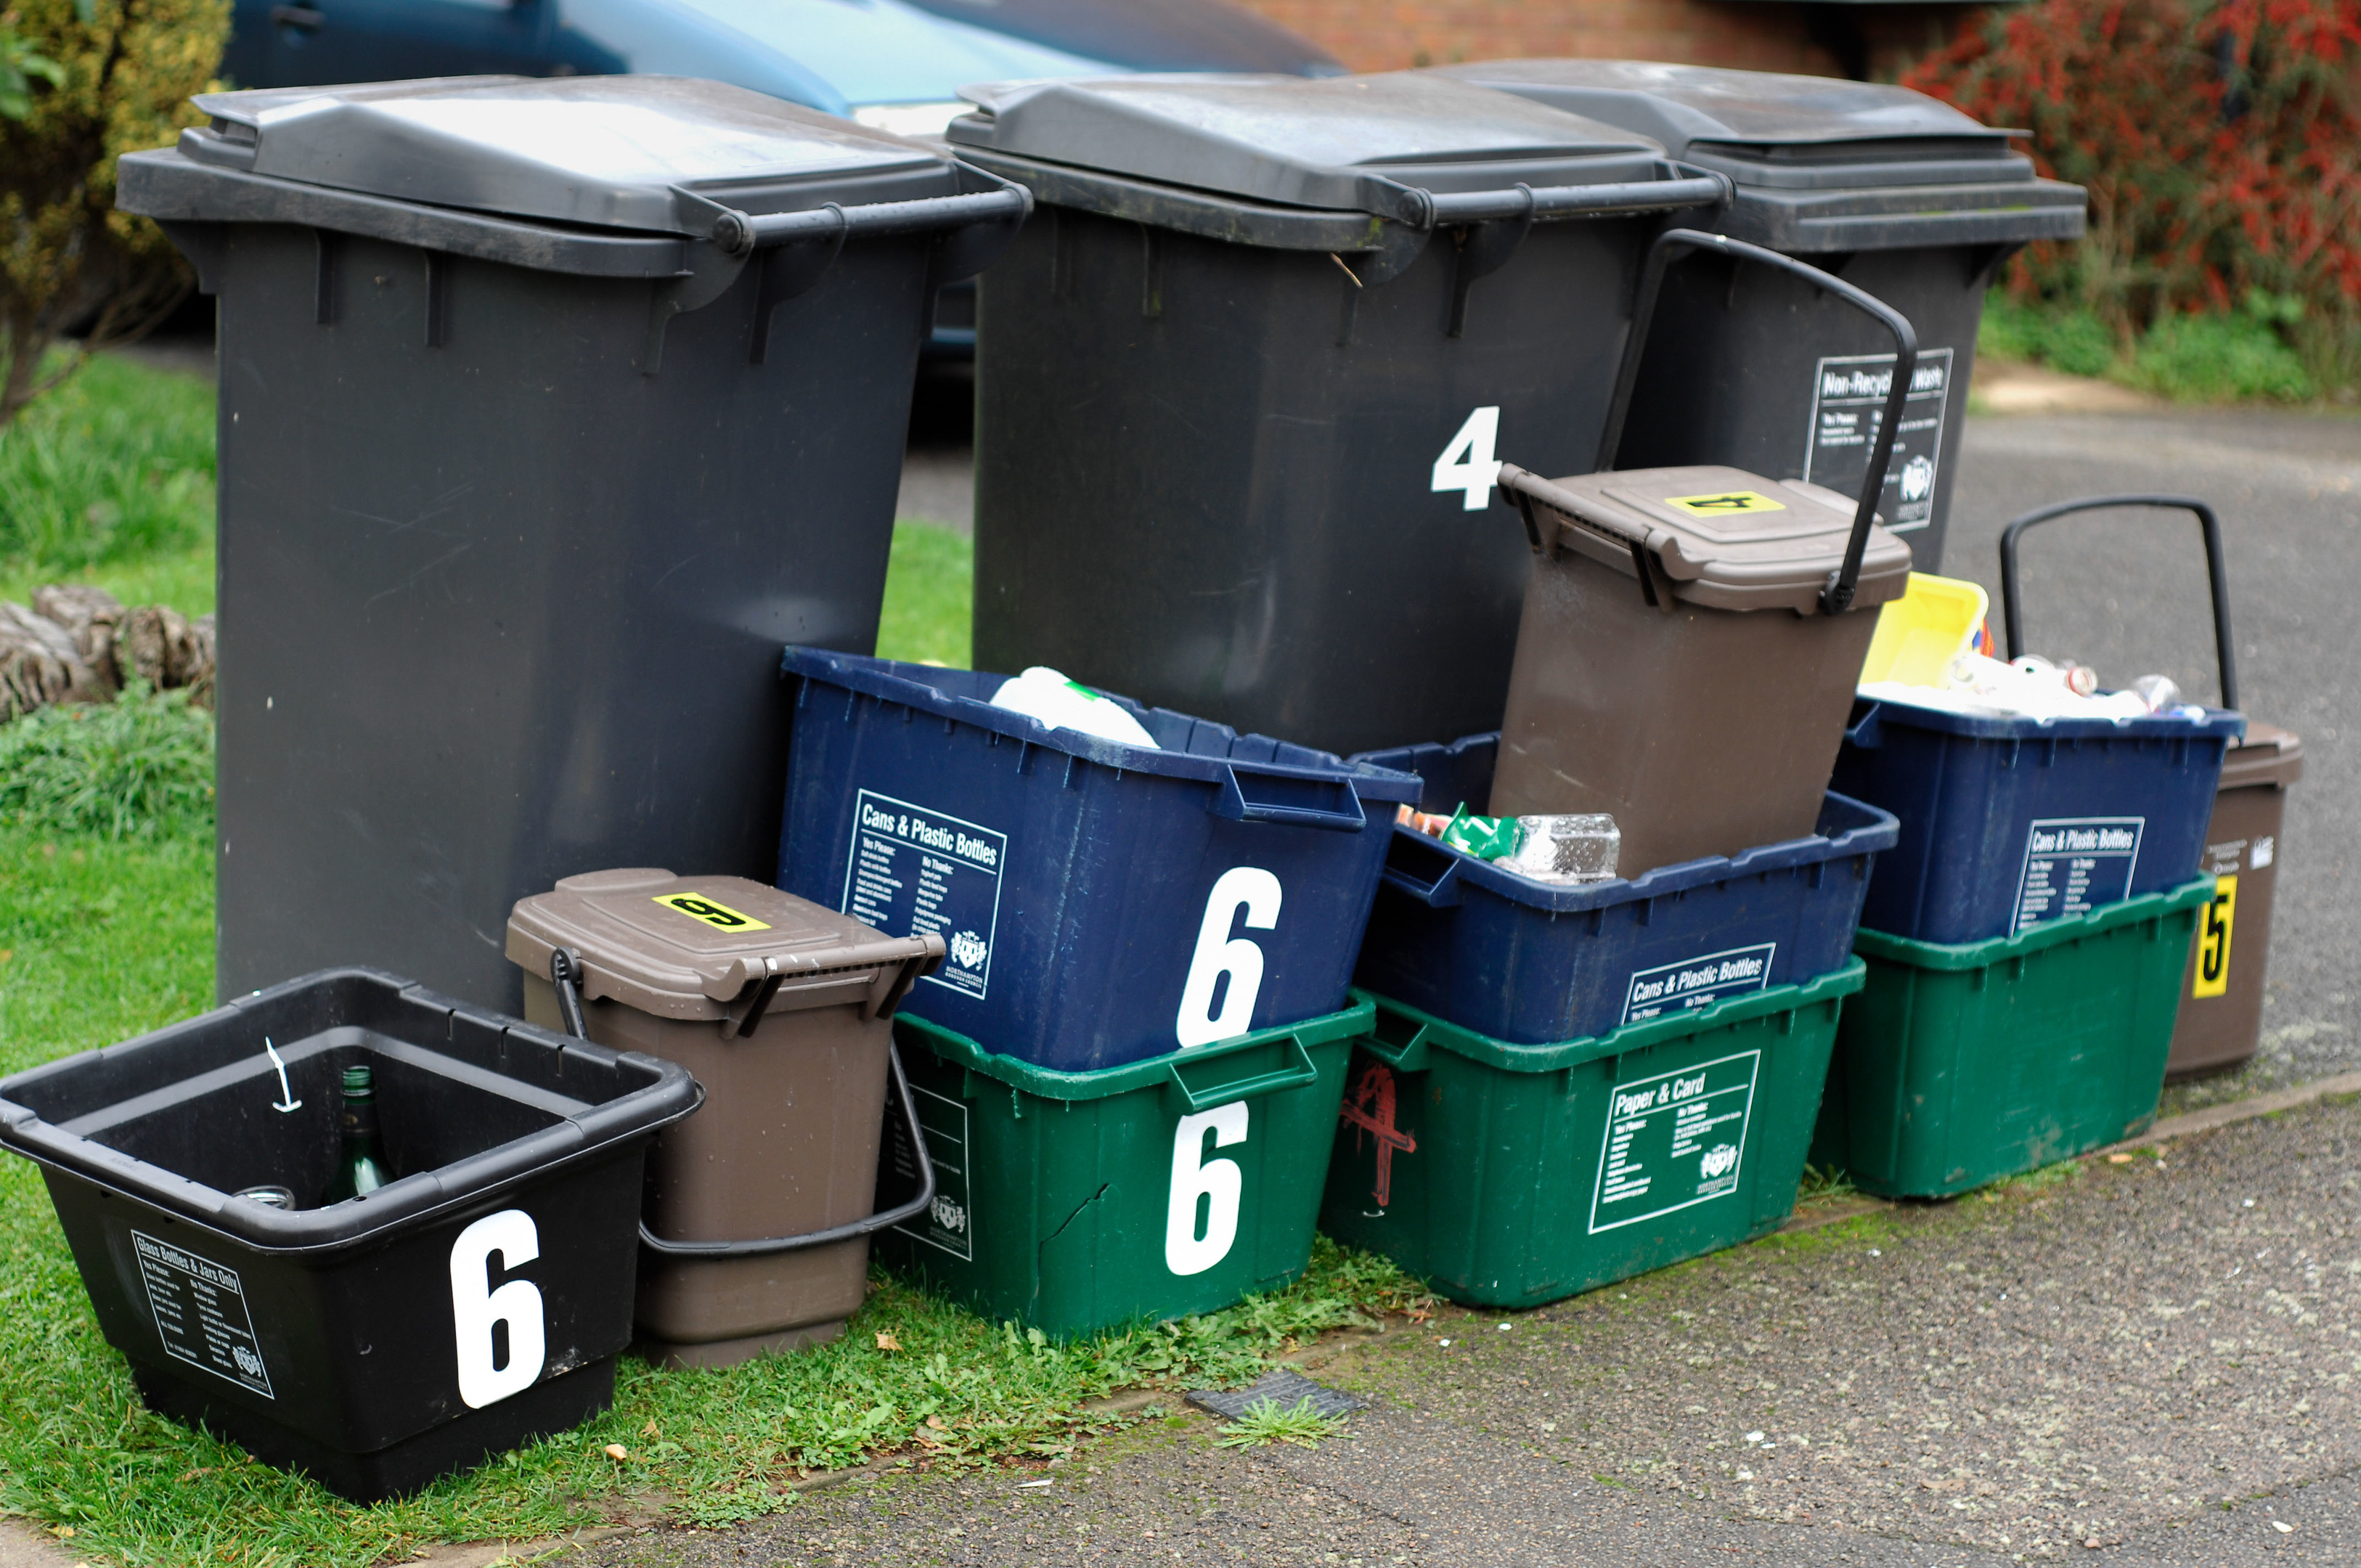 Recycling rubbish bins